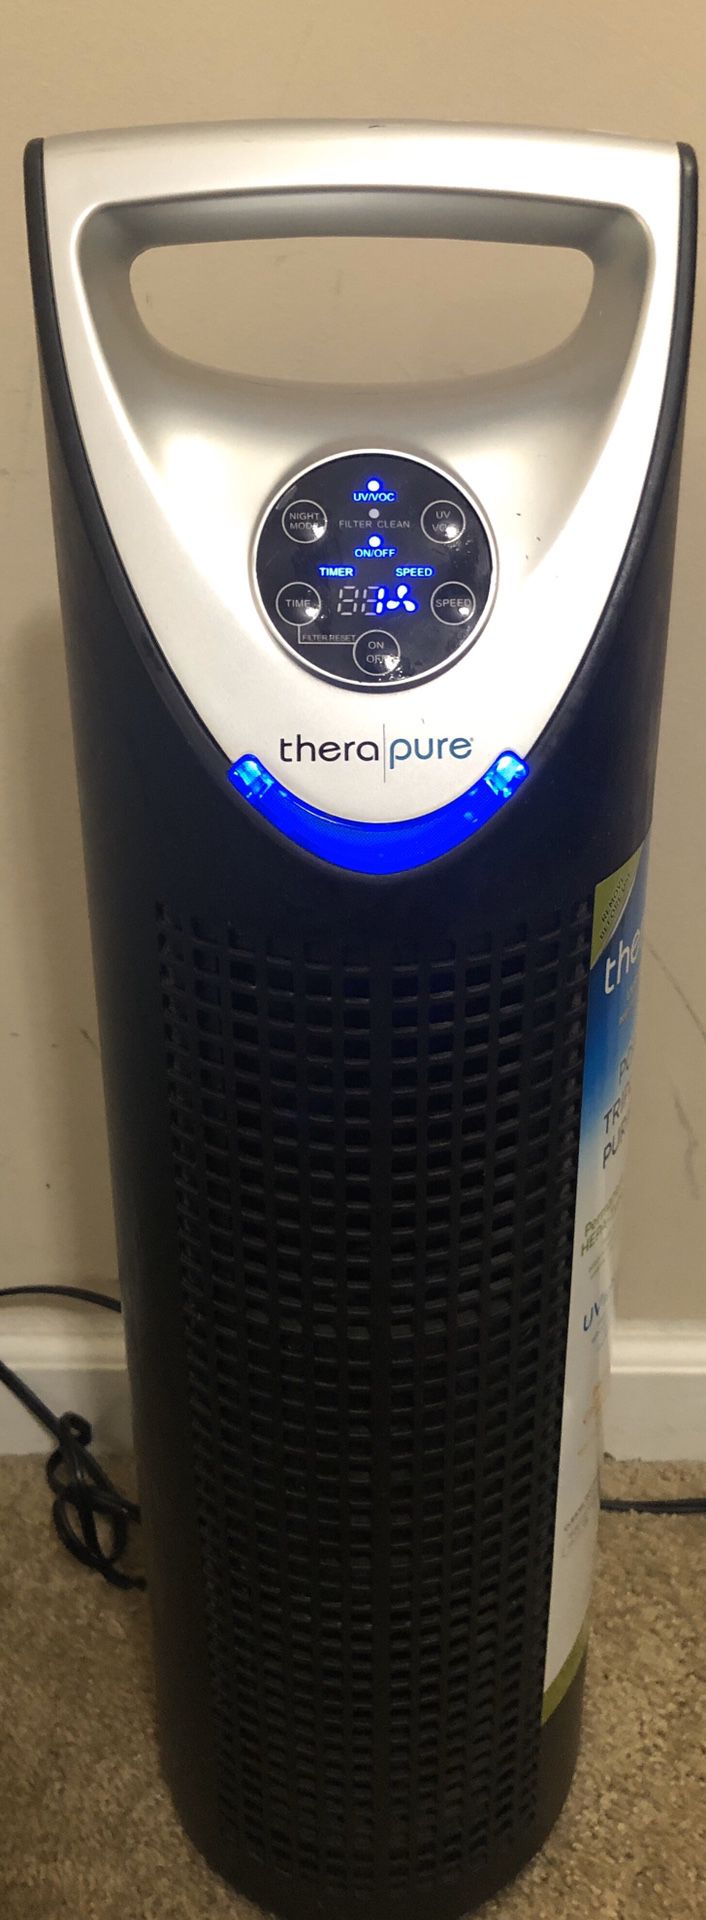 ENVION TheraPure UV Germicidal Air Purifier TPP540 HEPA Filter